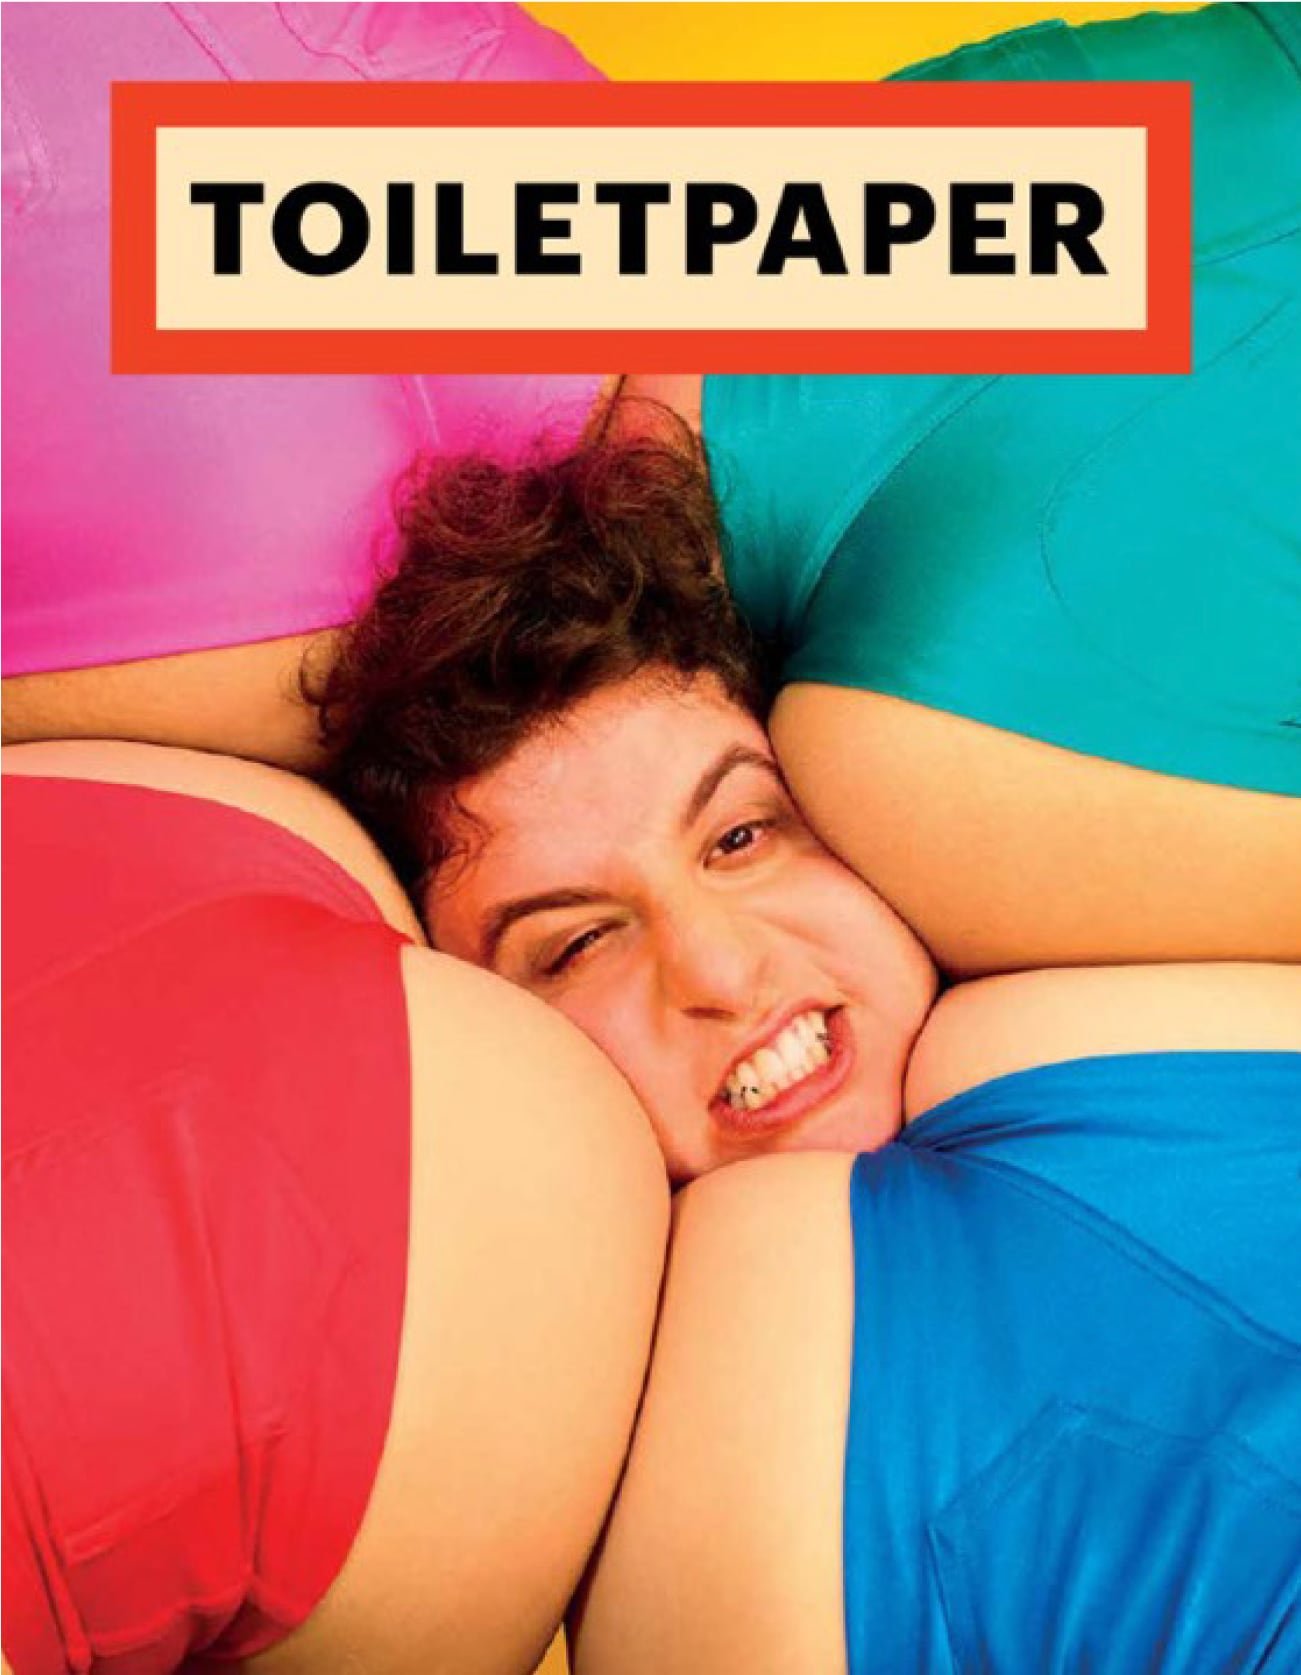 Toiletpaper magazine20.jpg